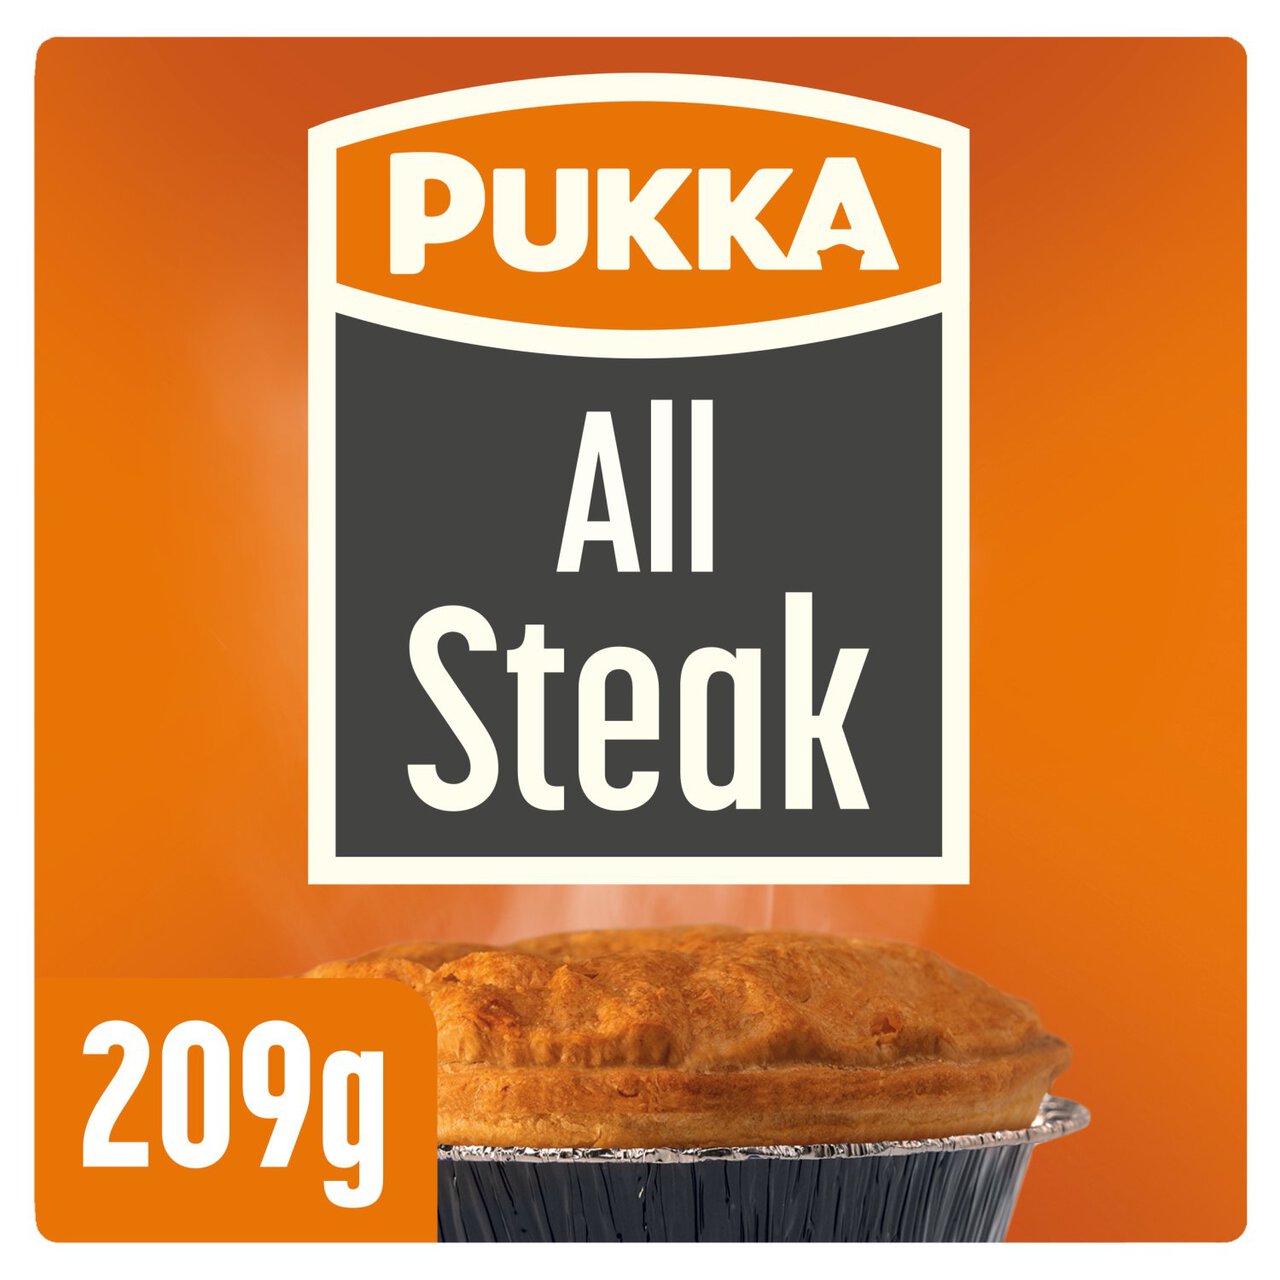 Pukka Pies All Steak 209g